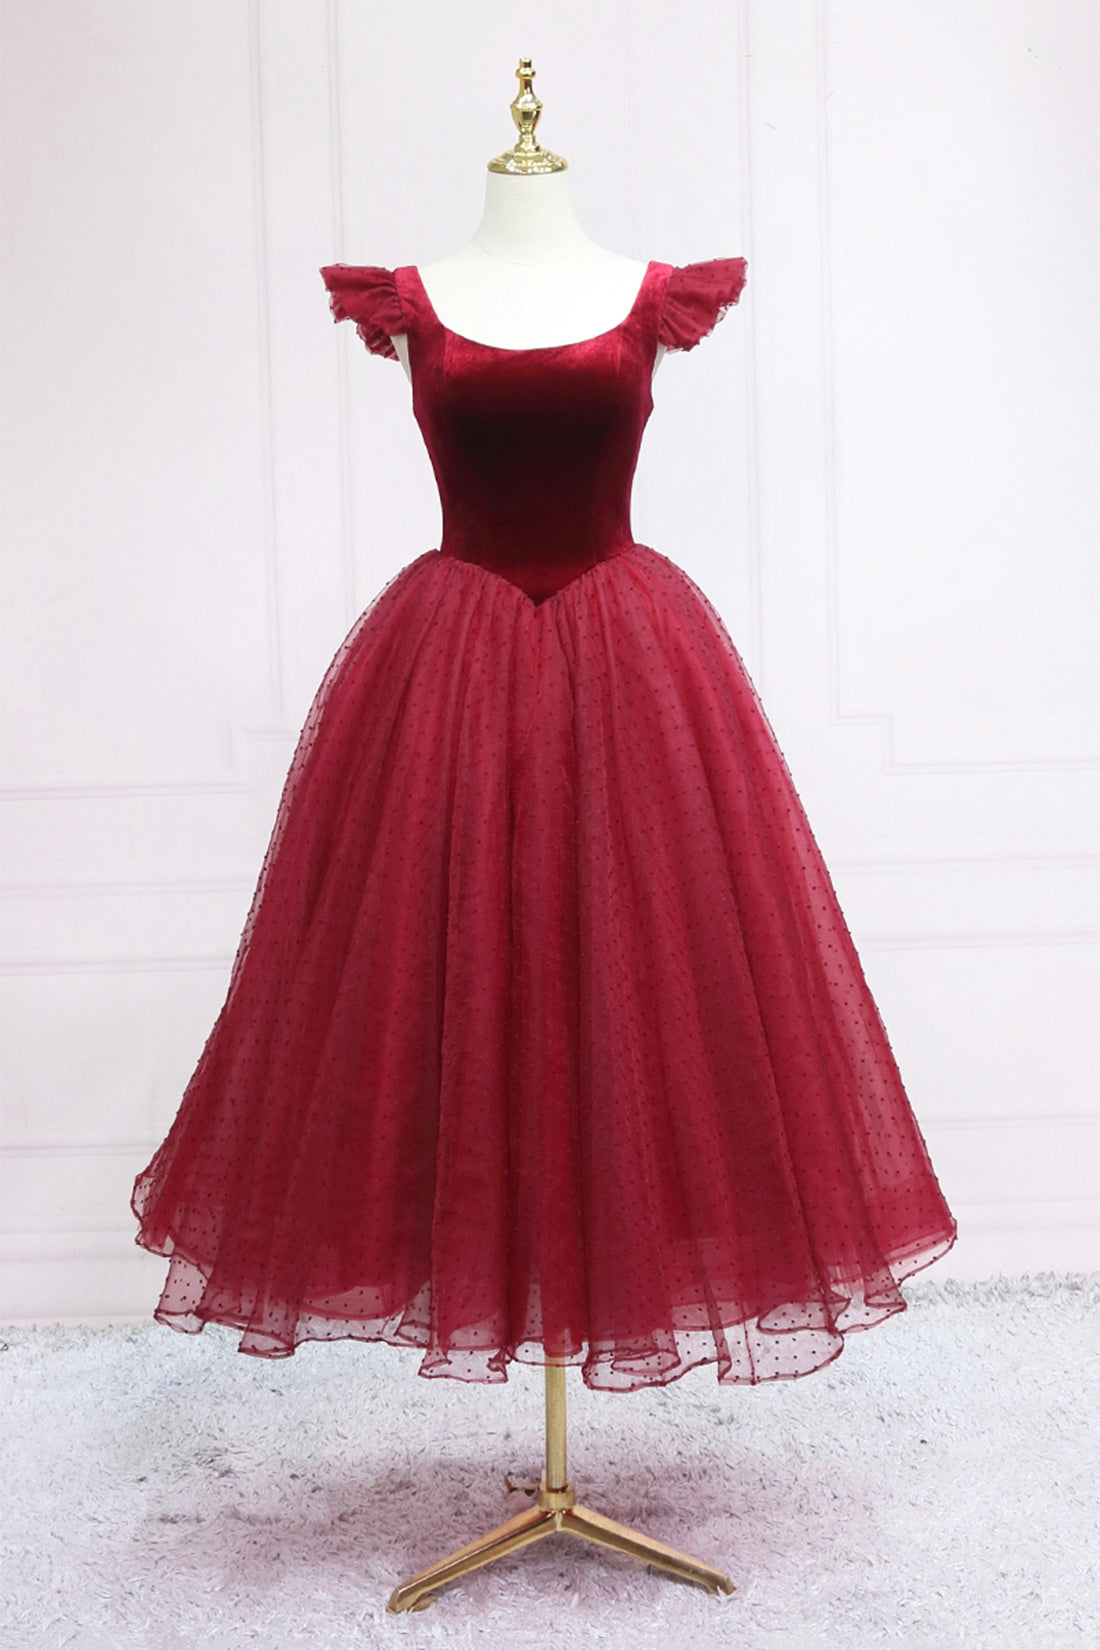 Burgundy Velvet Tulle Tea Length Prom Dress, Cute A-Line Party Dress